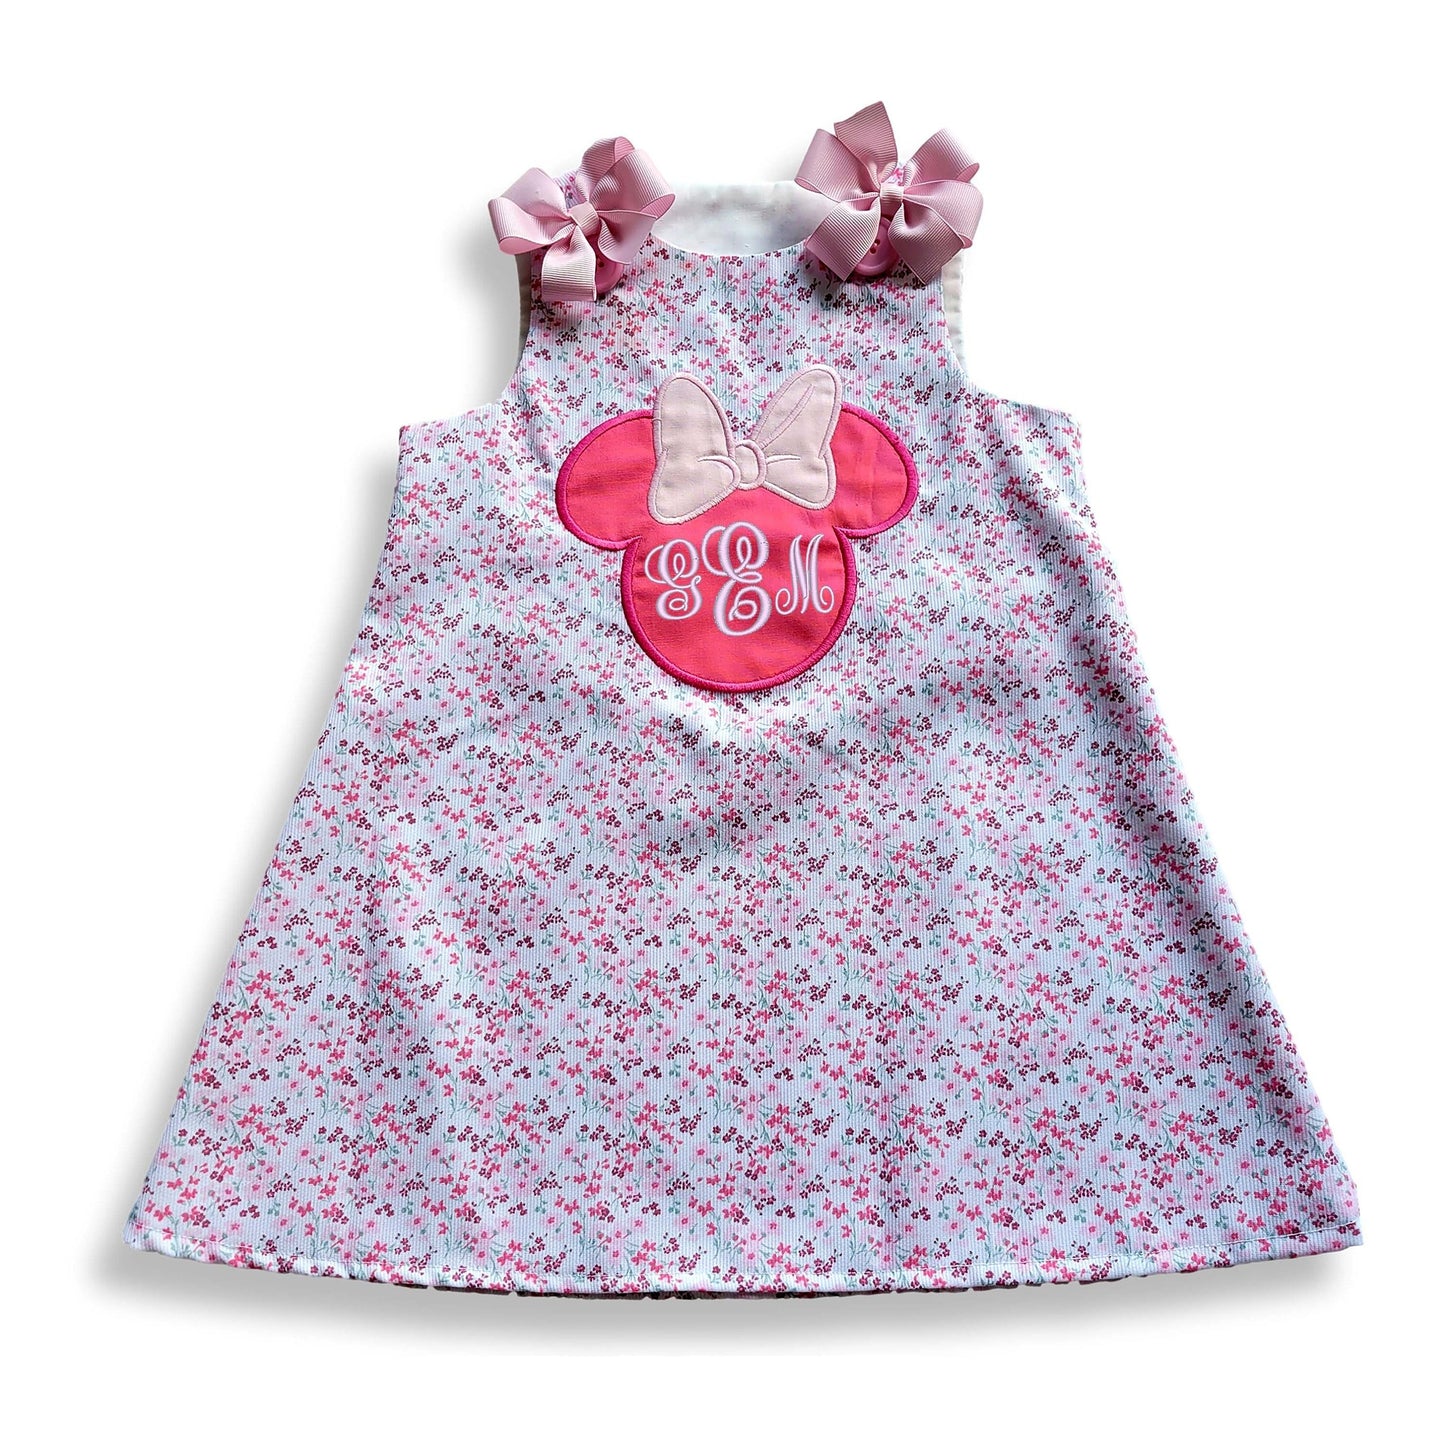 Minnie Mouse Dress ,   Minnie Birthday dress, Personalized  Minnie Birthday outfit, Monogram Minnie dress